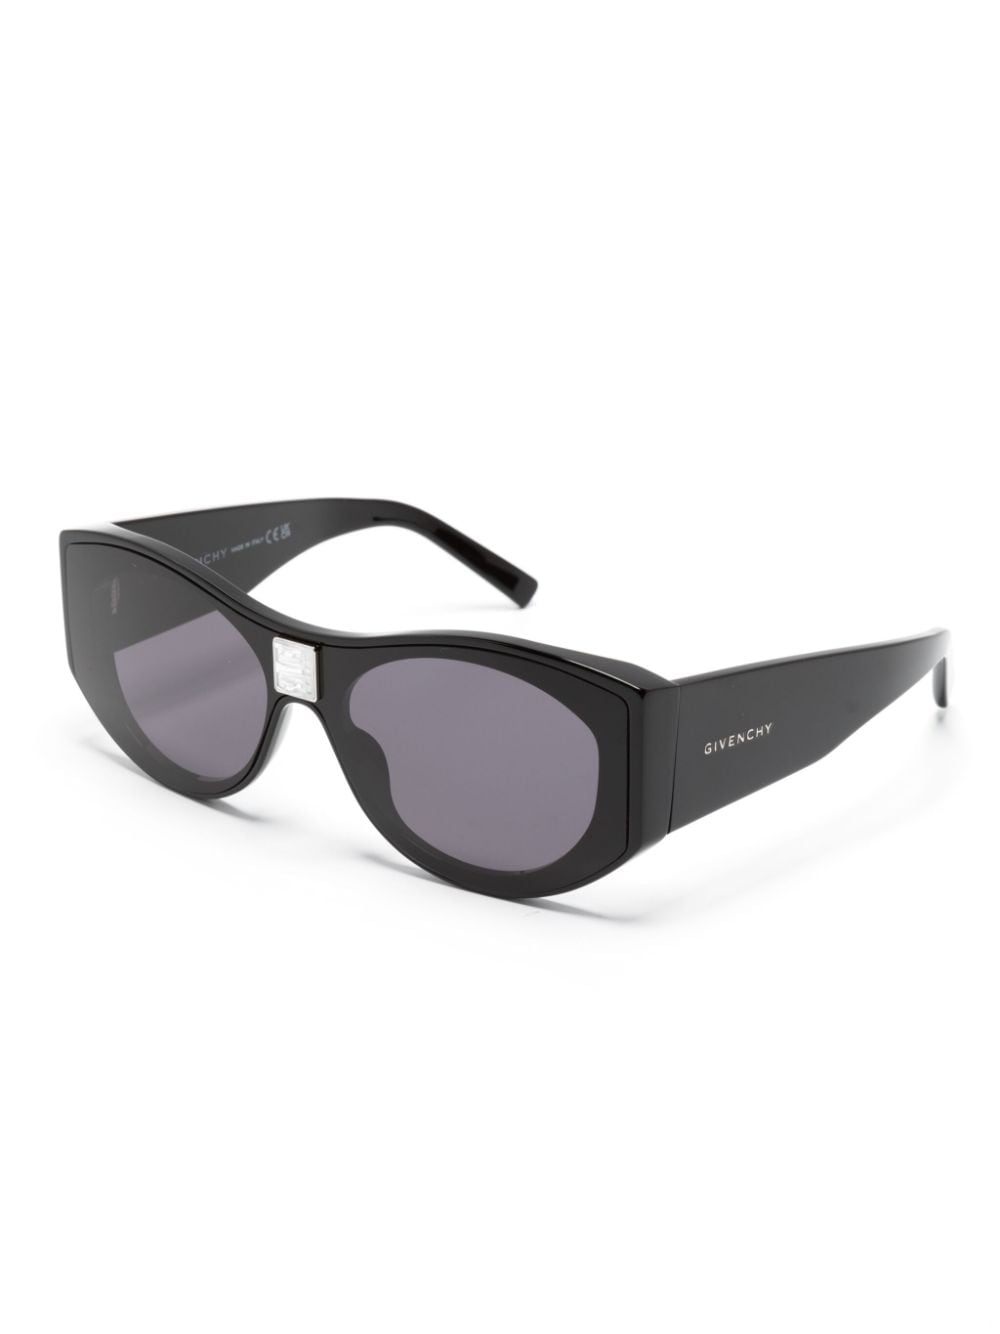 Givenchy 4Gem zonnebril met ovaal montuur - Zwart